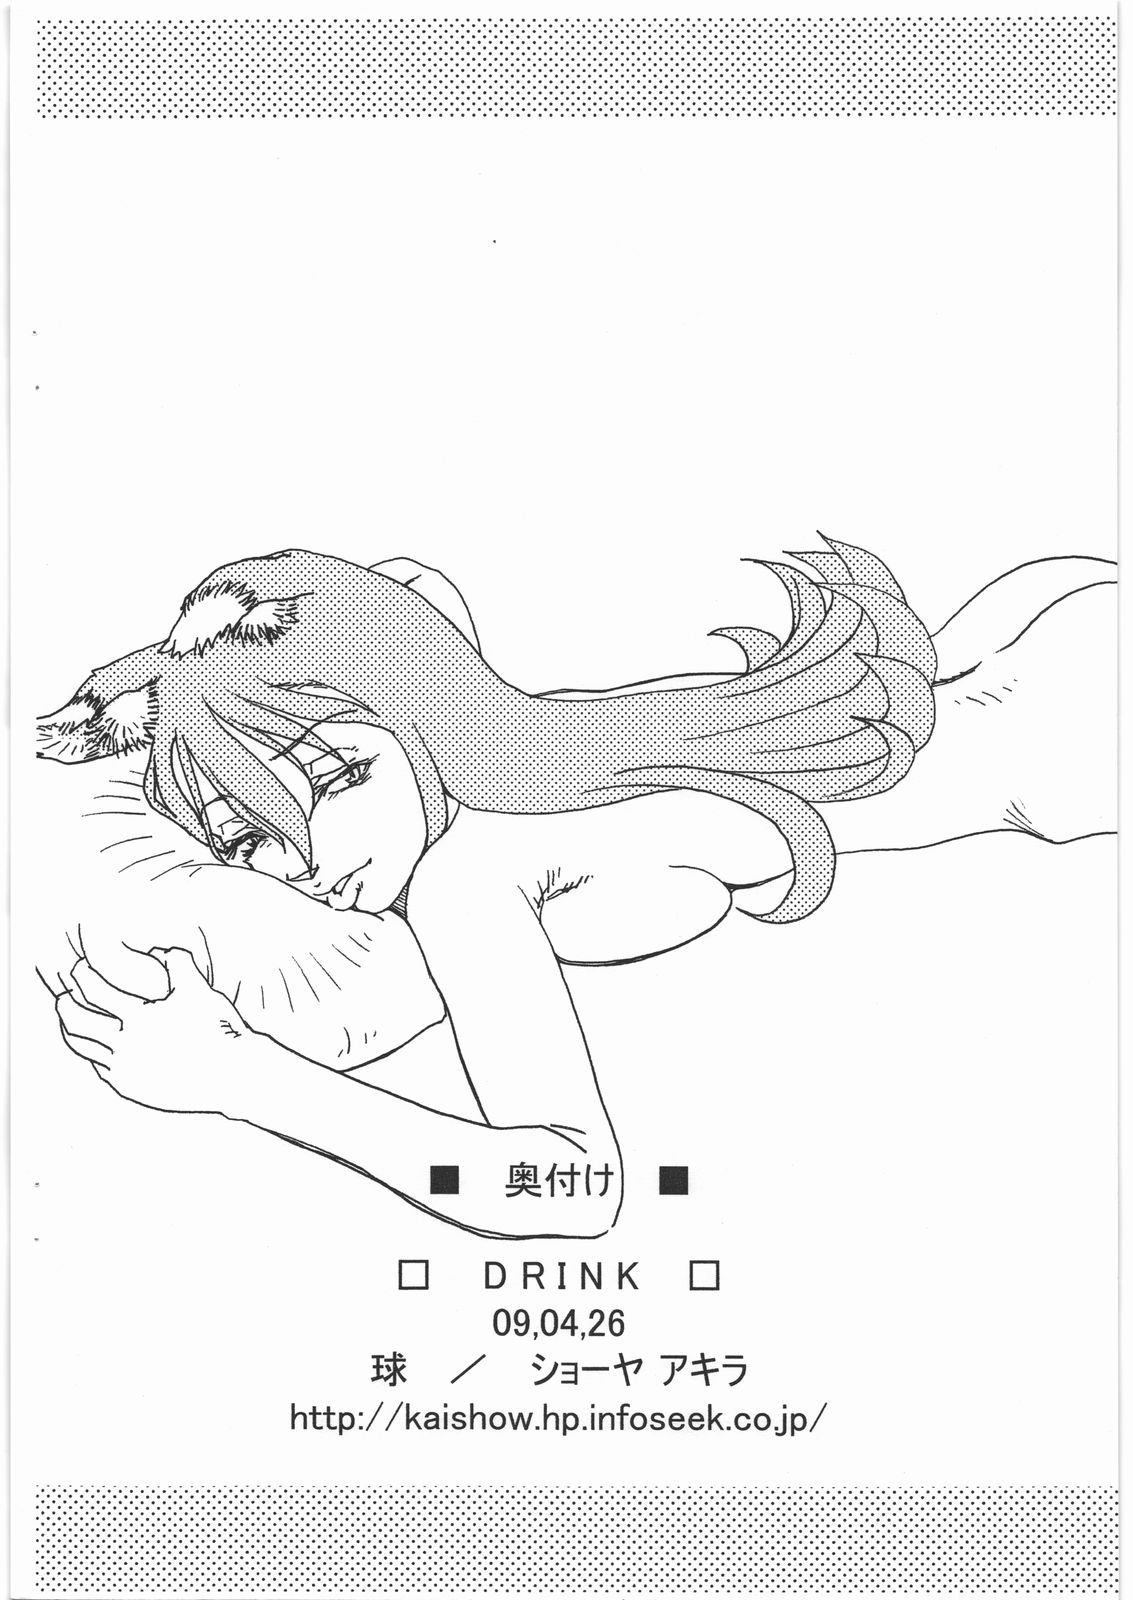 [Dama] DRINK [球] DRINK